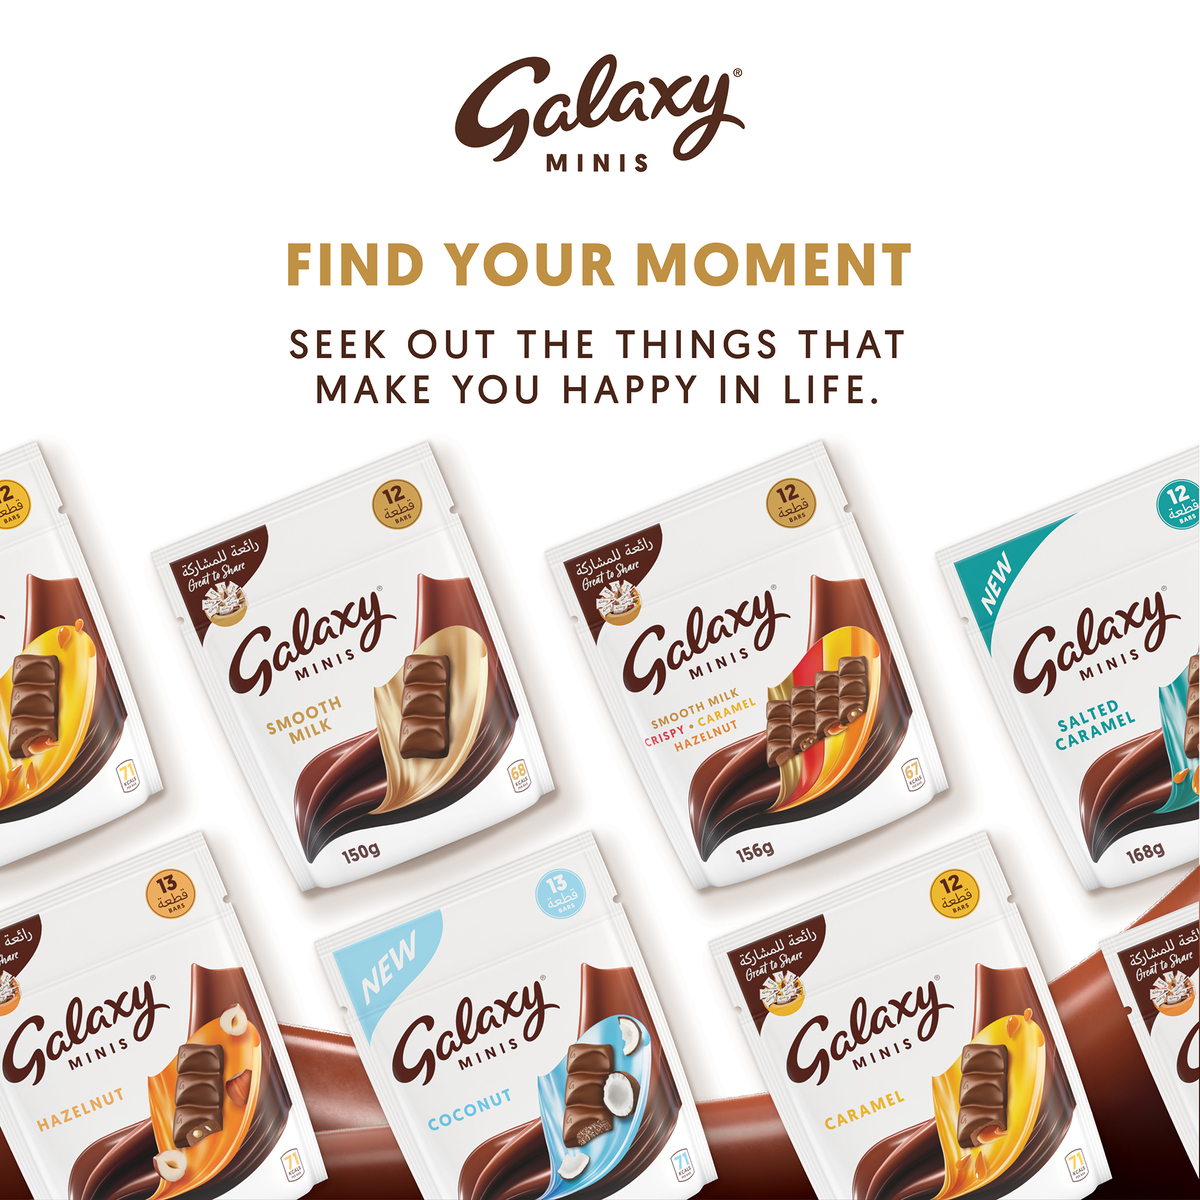 Galaxy Minis Hazelnut Chocolate Bar 18 pcs 225 g